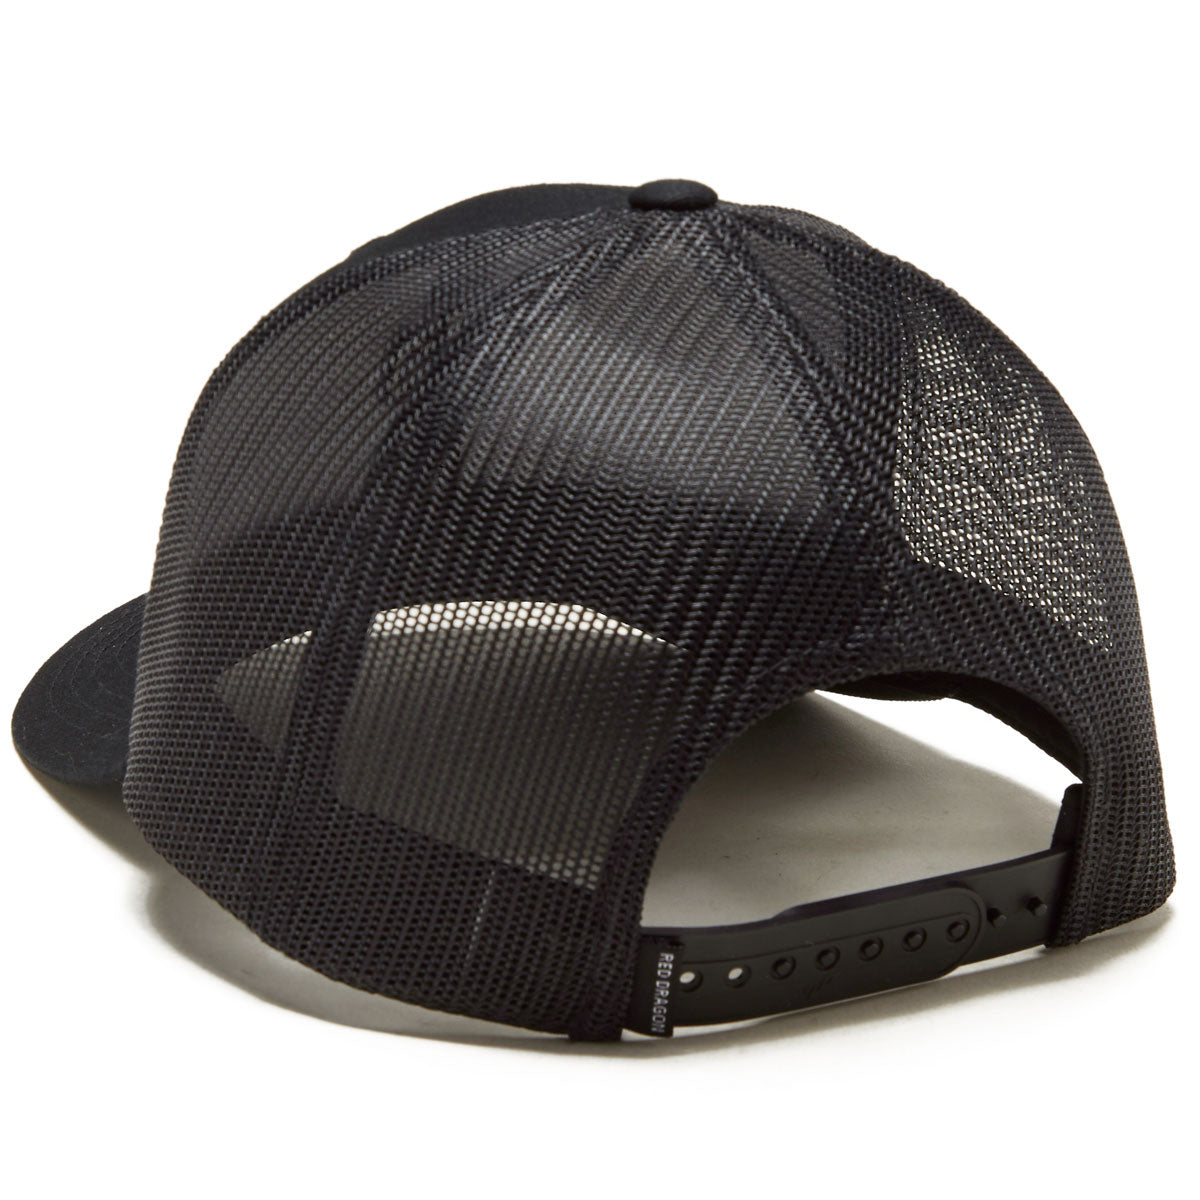 RDS Snapback Og Puffy Recycled Hat - Black/Black image 2